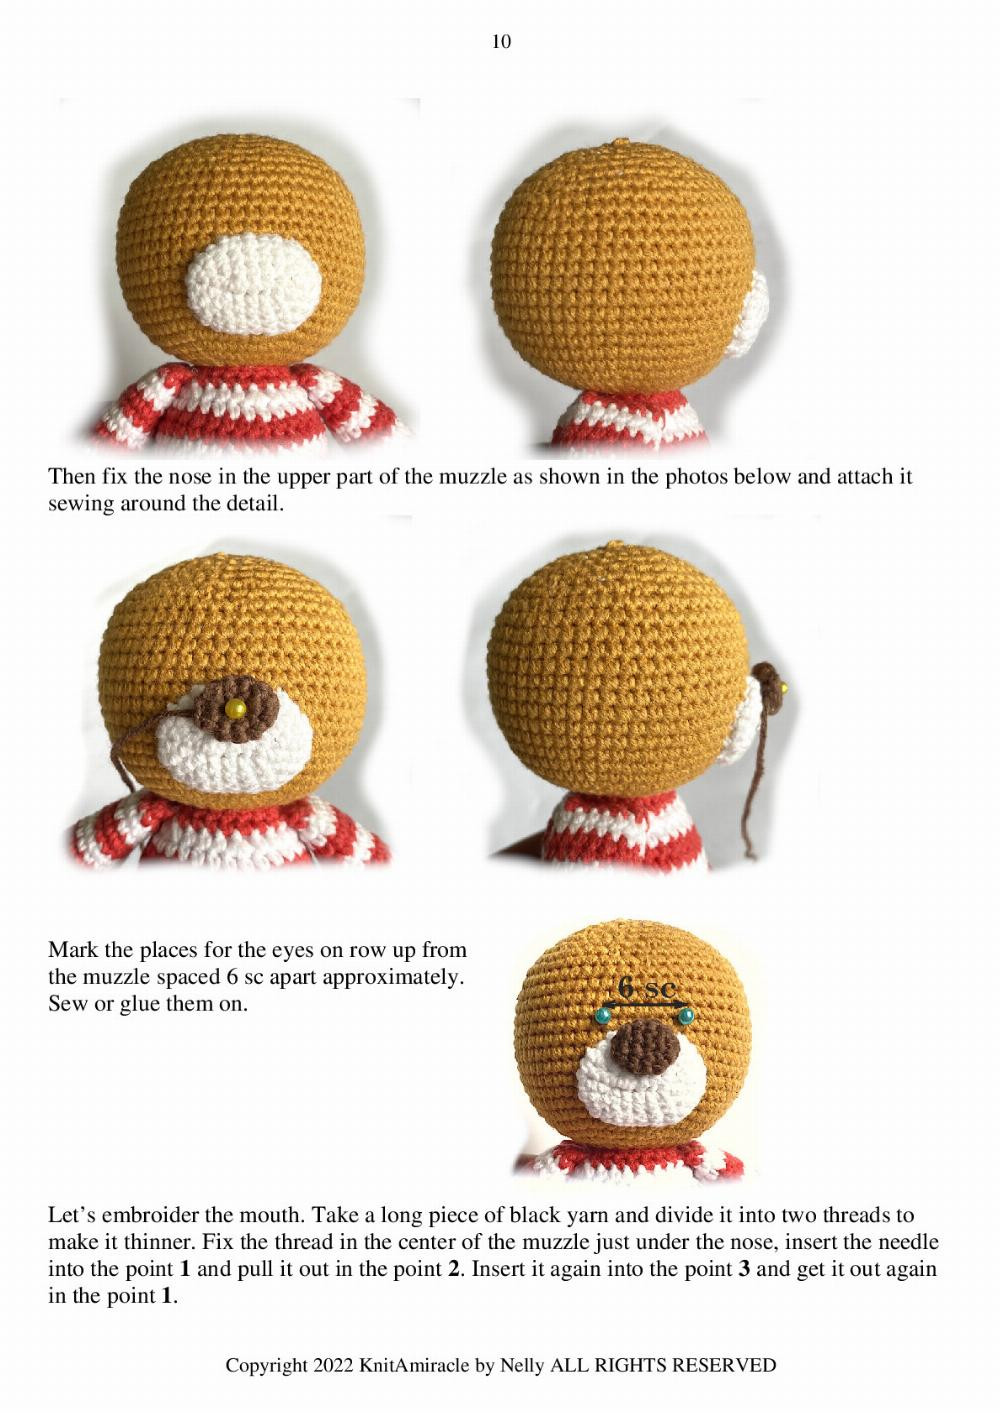 Knit a Miracle crochet pattern